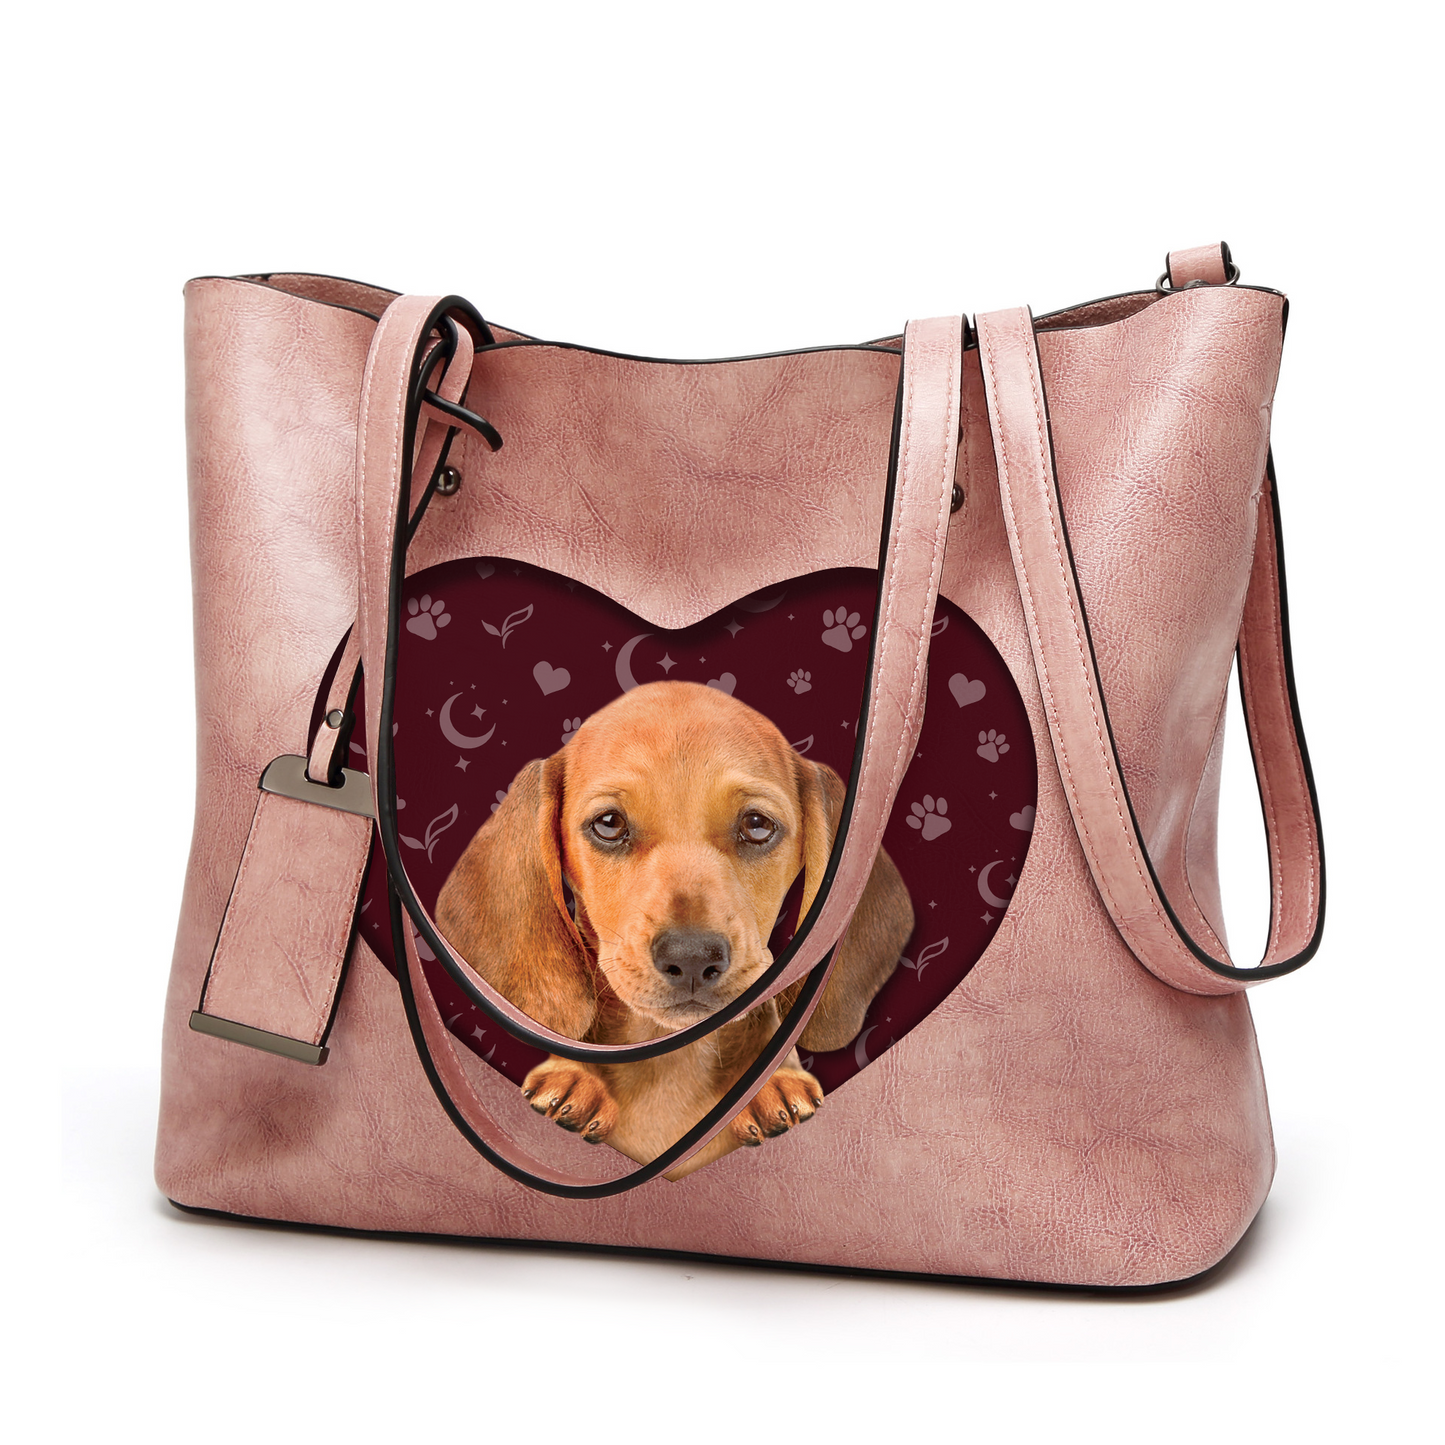 I Know I'm Cute - Dachshund Glamour Handbag V2 - 7